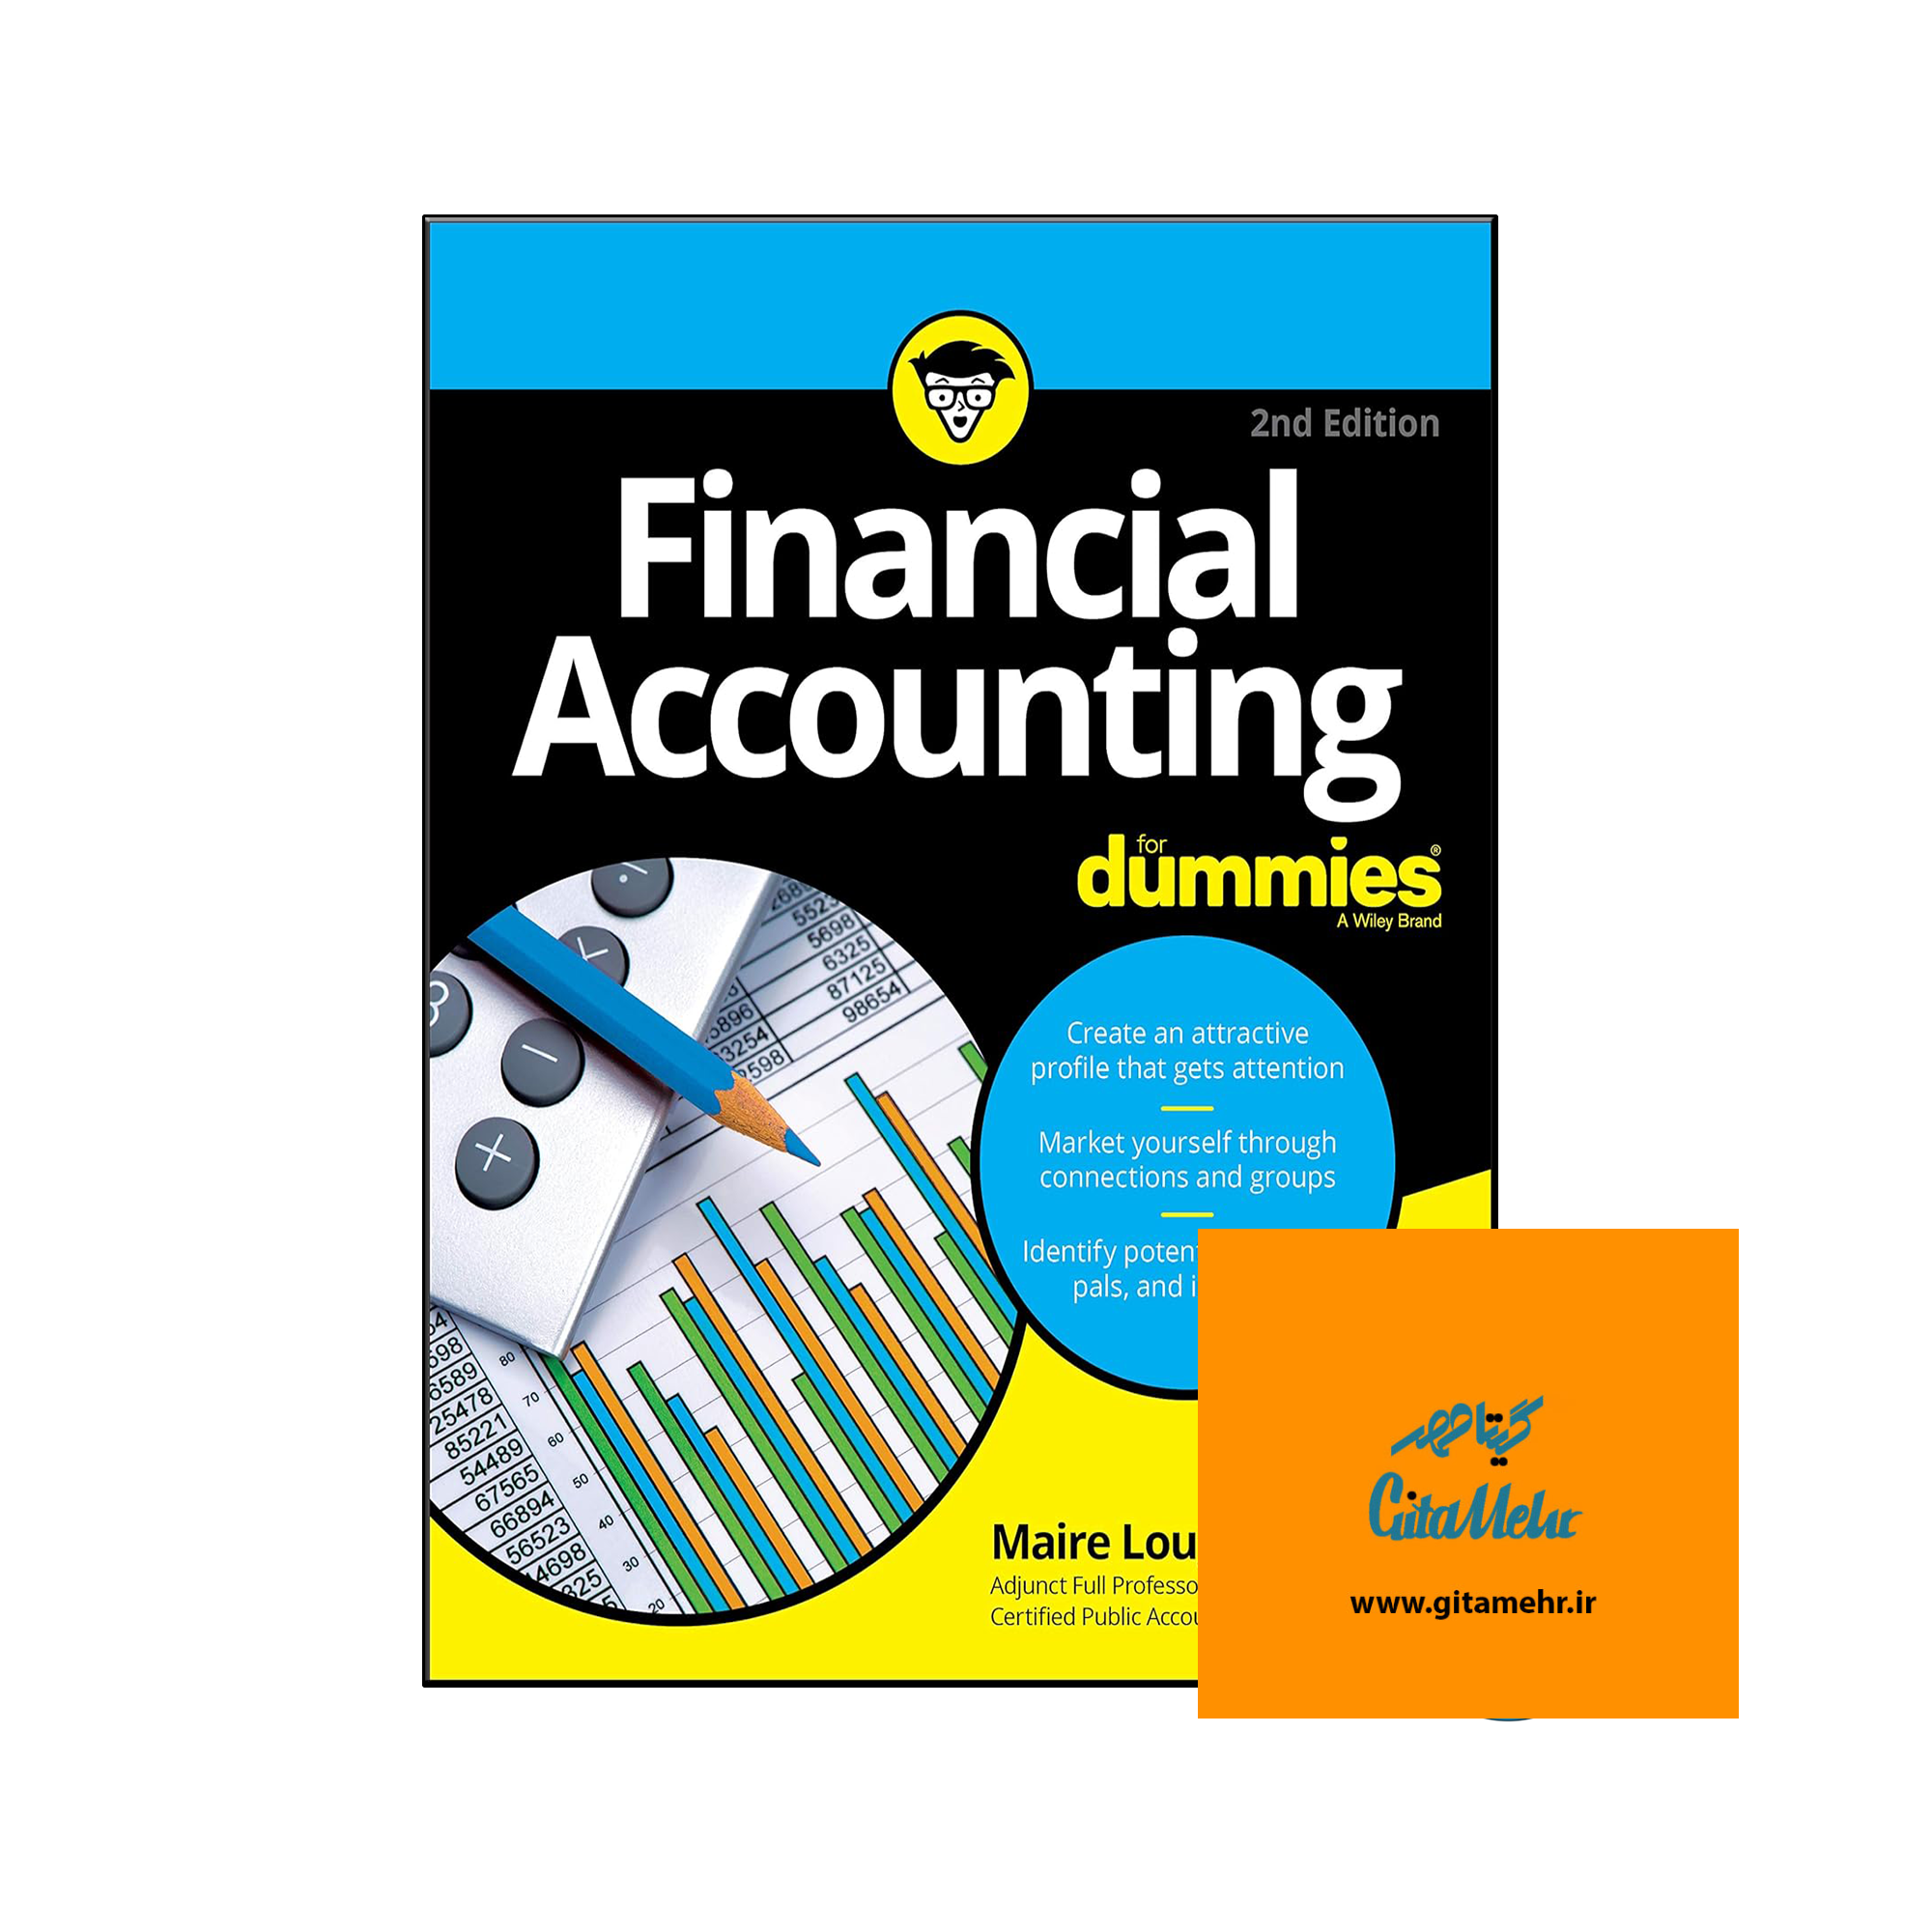 daa9d8aad8a7d8a8 financial accounting for dummies 2nd 65ed88396b574